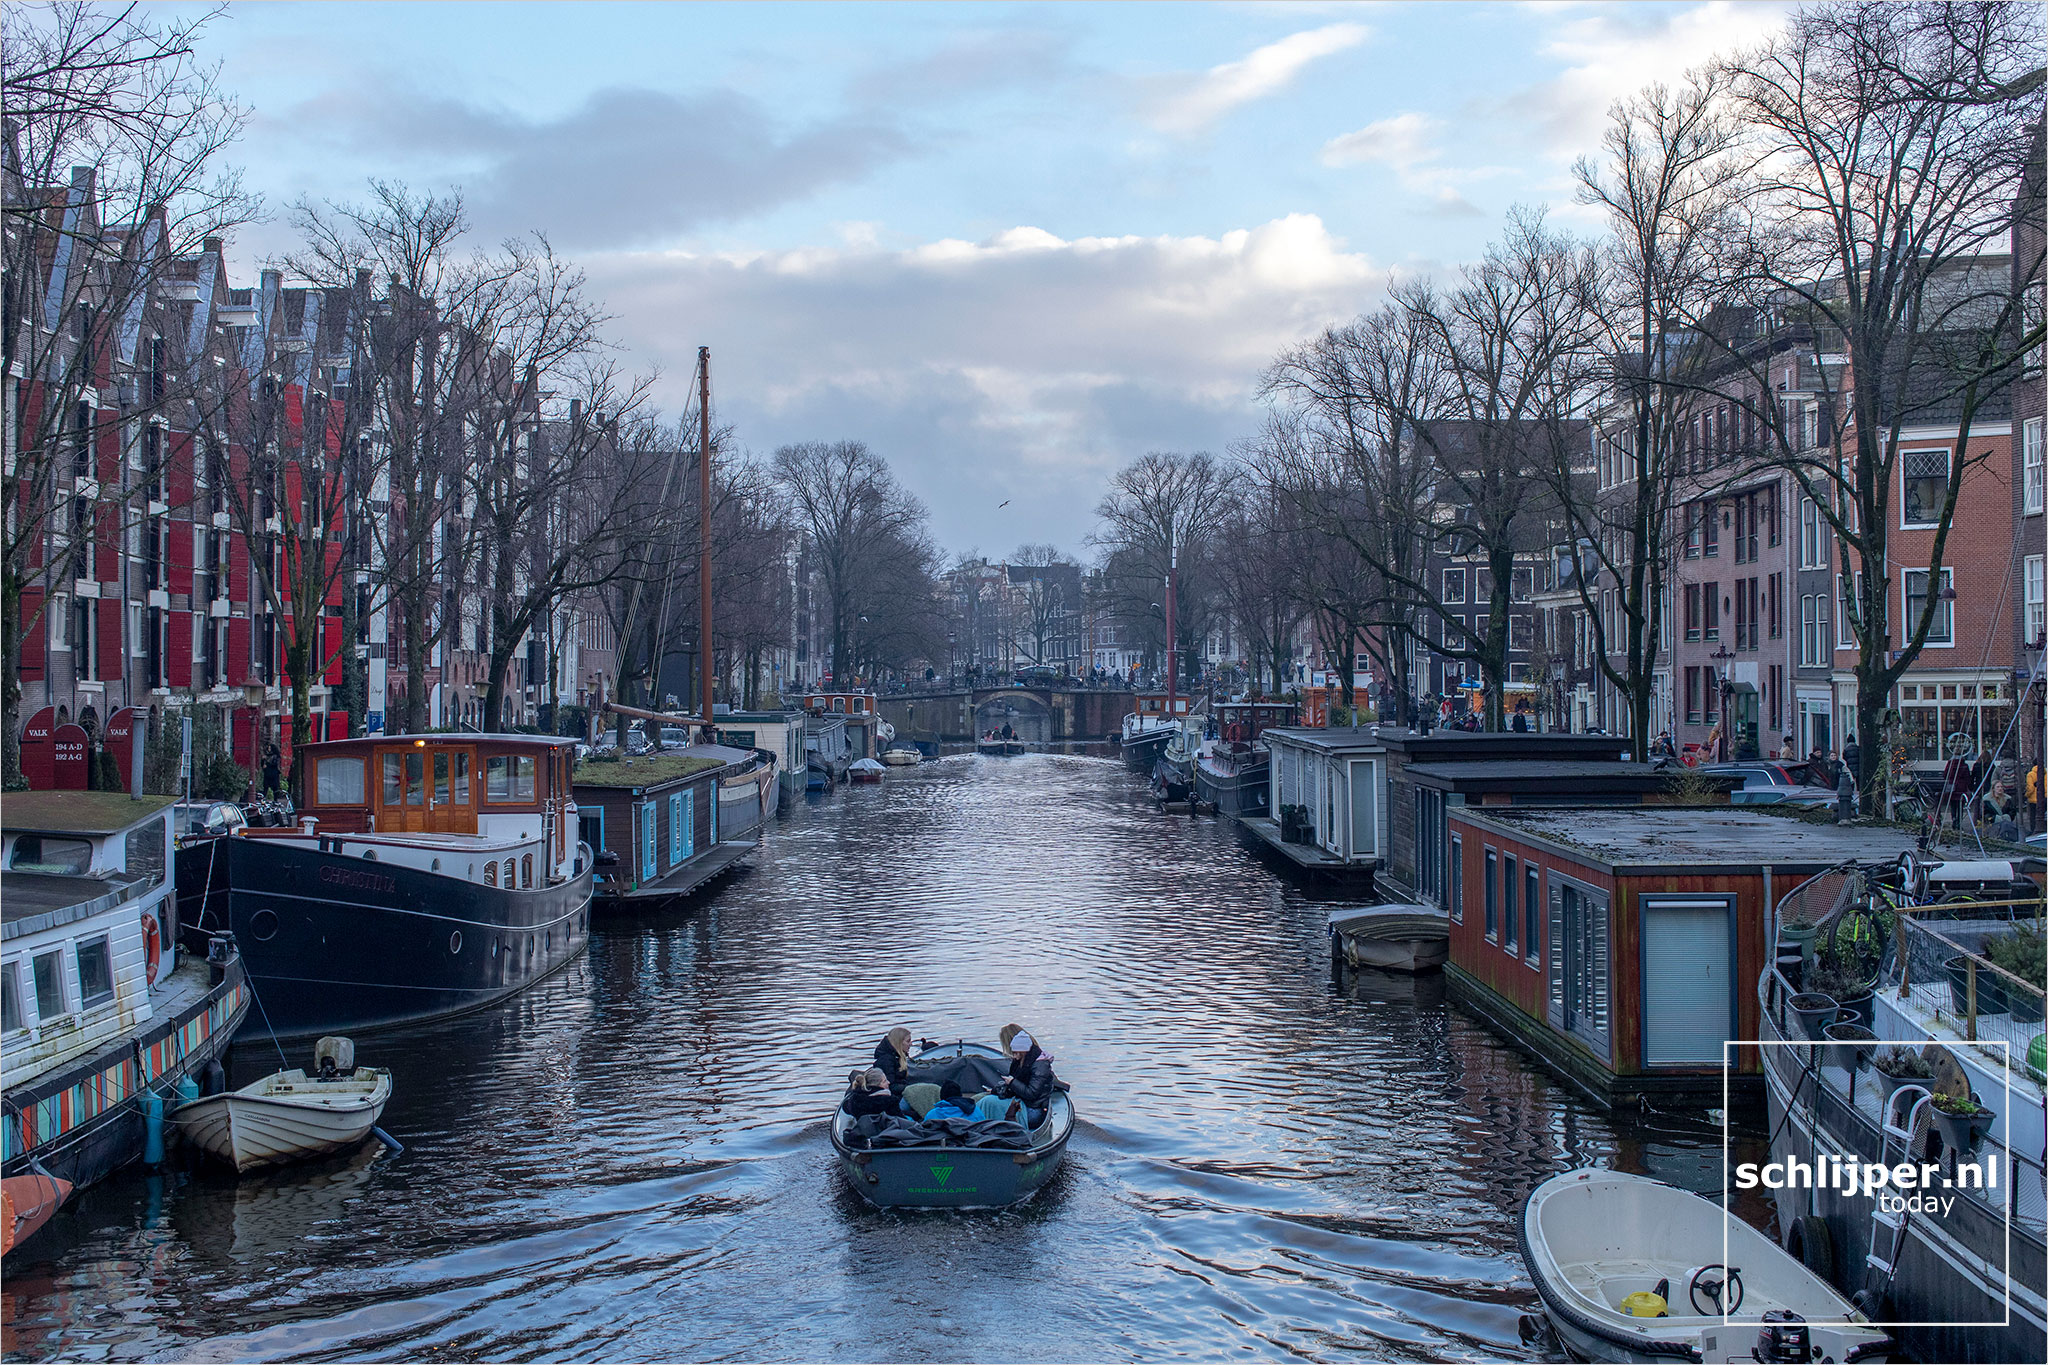 The Netherlands, Amsterdam, 2 januari 2021